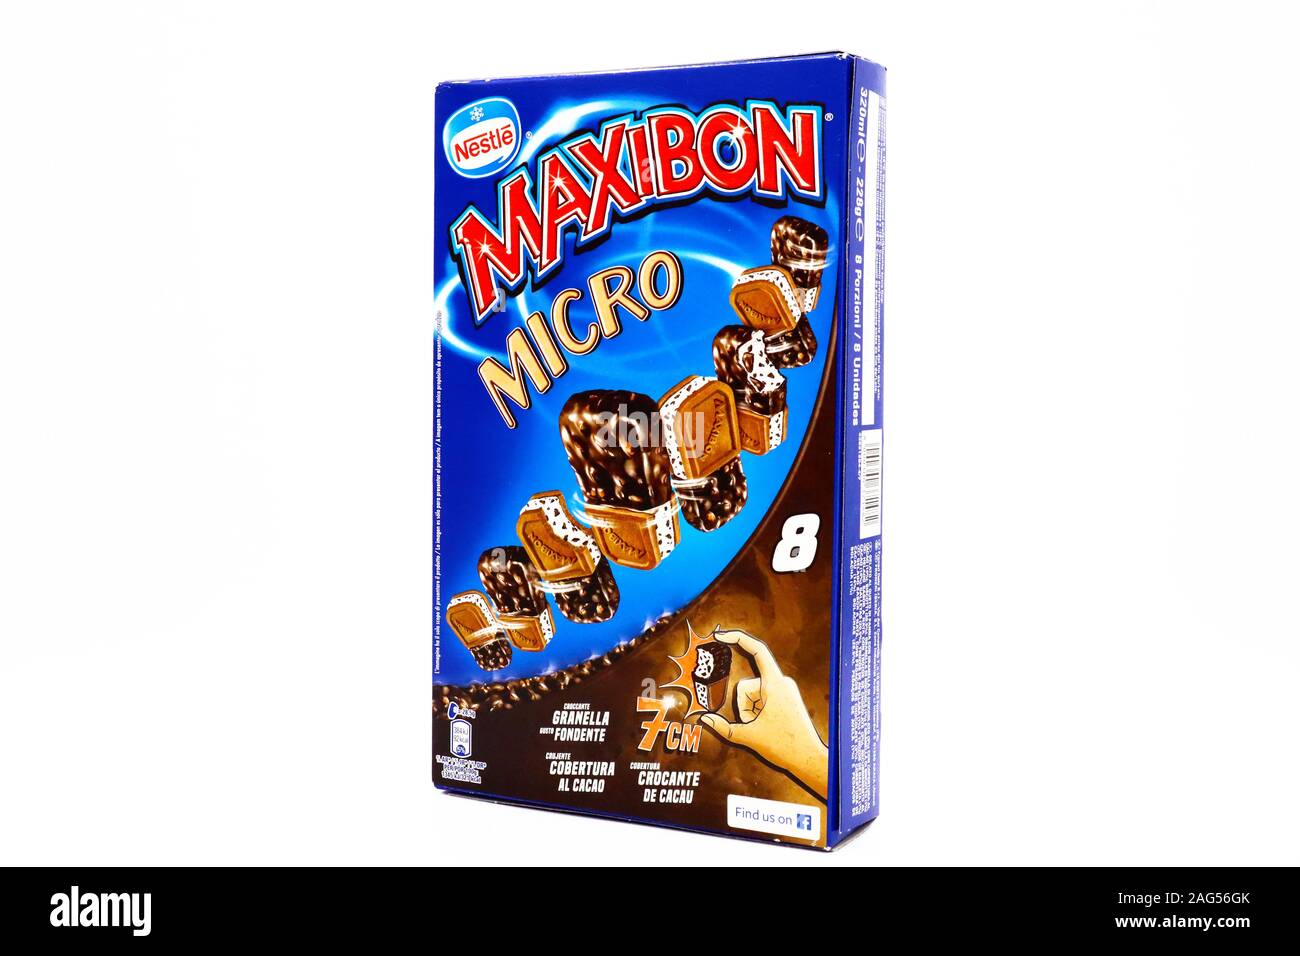 MAXIBON Ice Cream. Maxibon is a brand of Nestlé Stock Photo